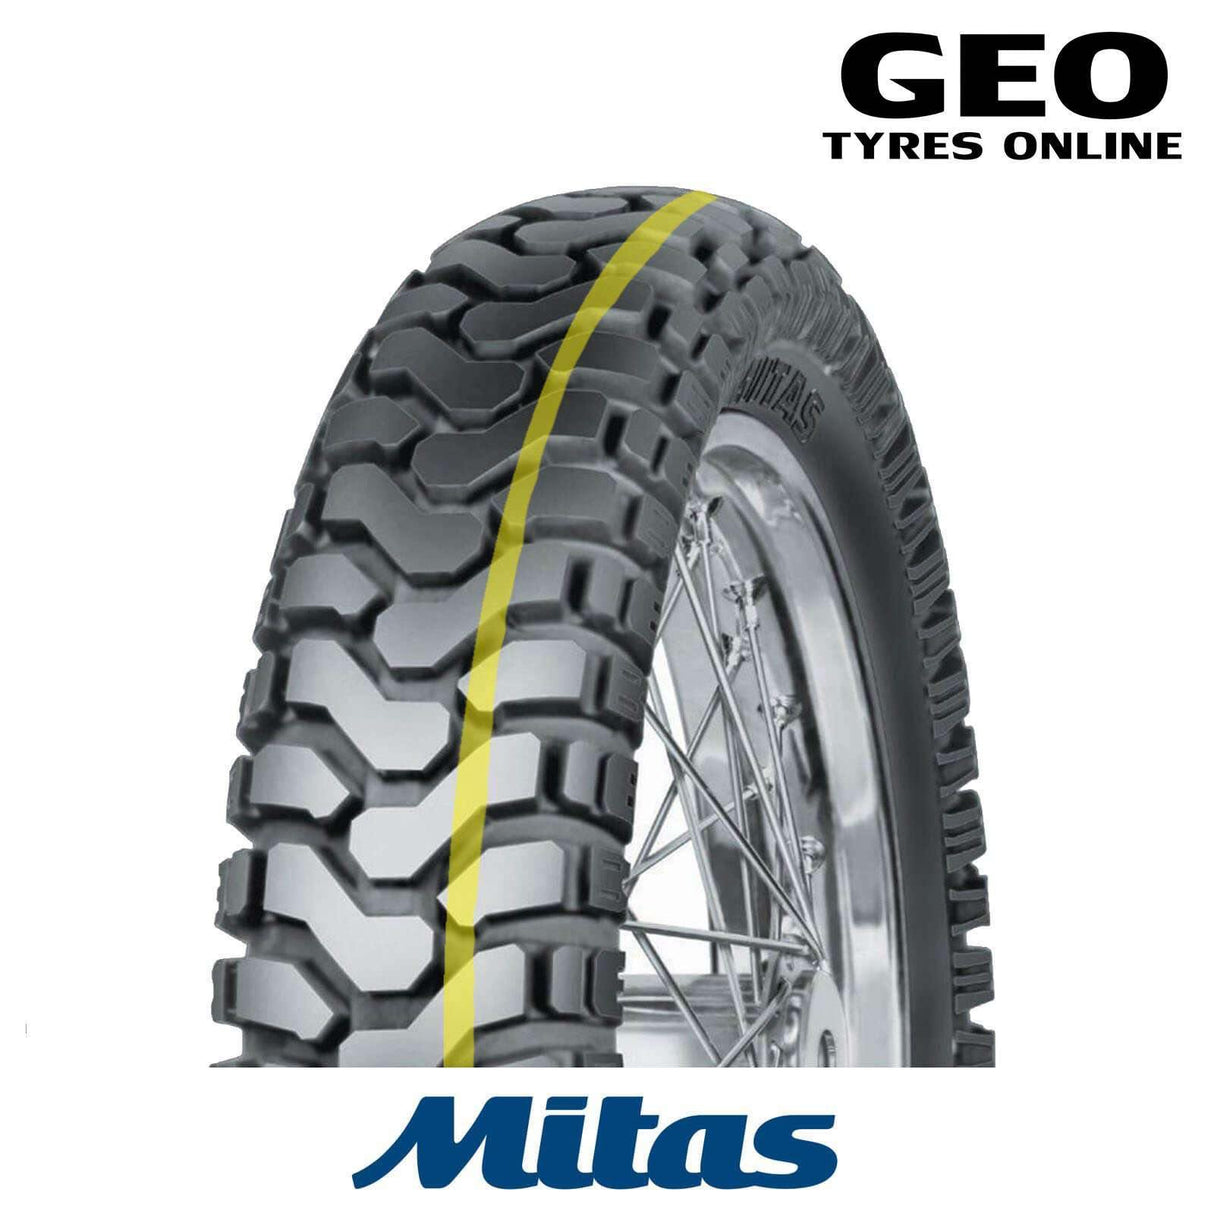 140/80-18 E07D (DAKAR) Mitas Dual Sport Rear Tyre - GEO Tyres Online